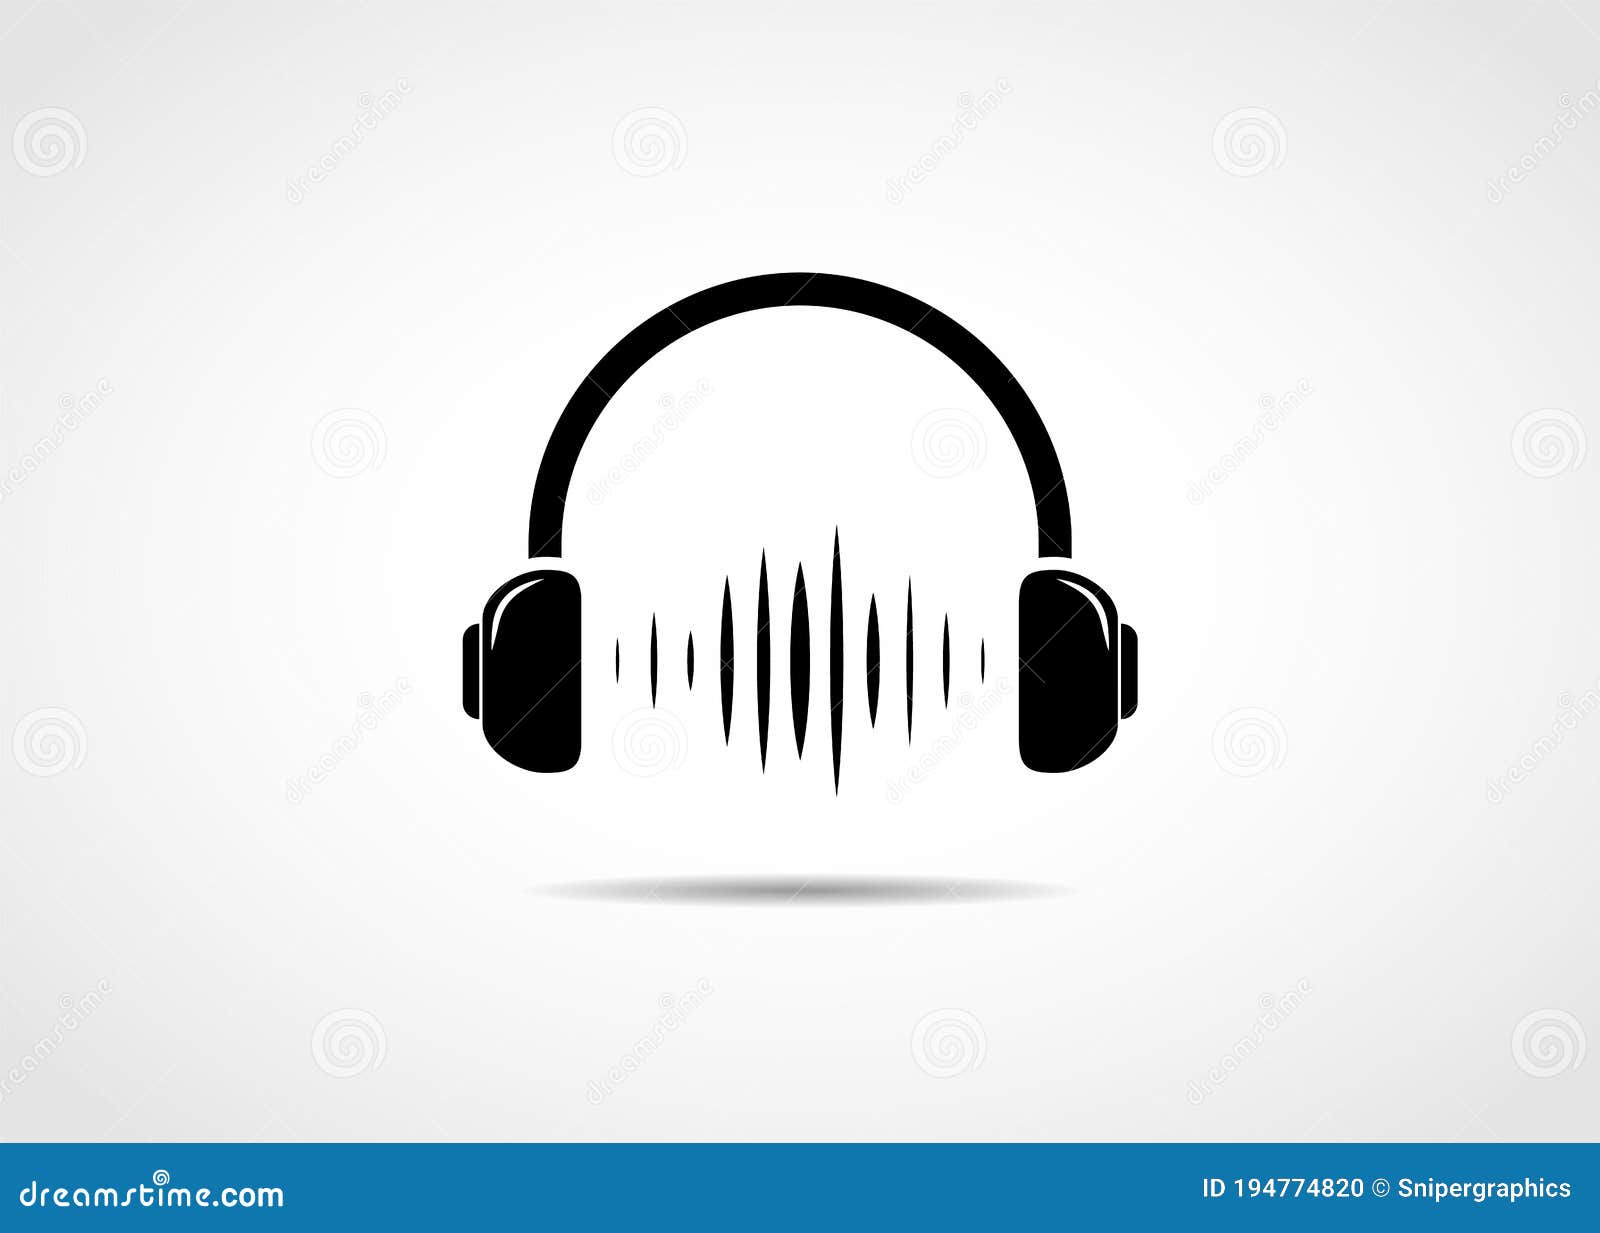 headphones icon with sound wave beats